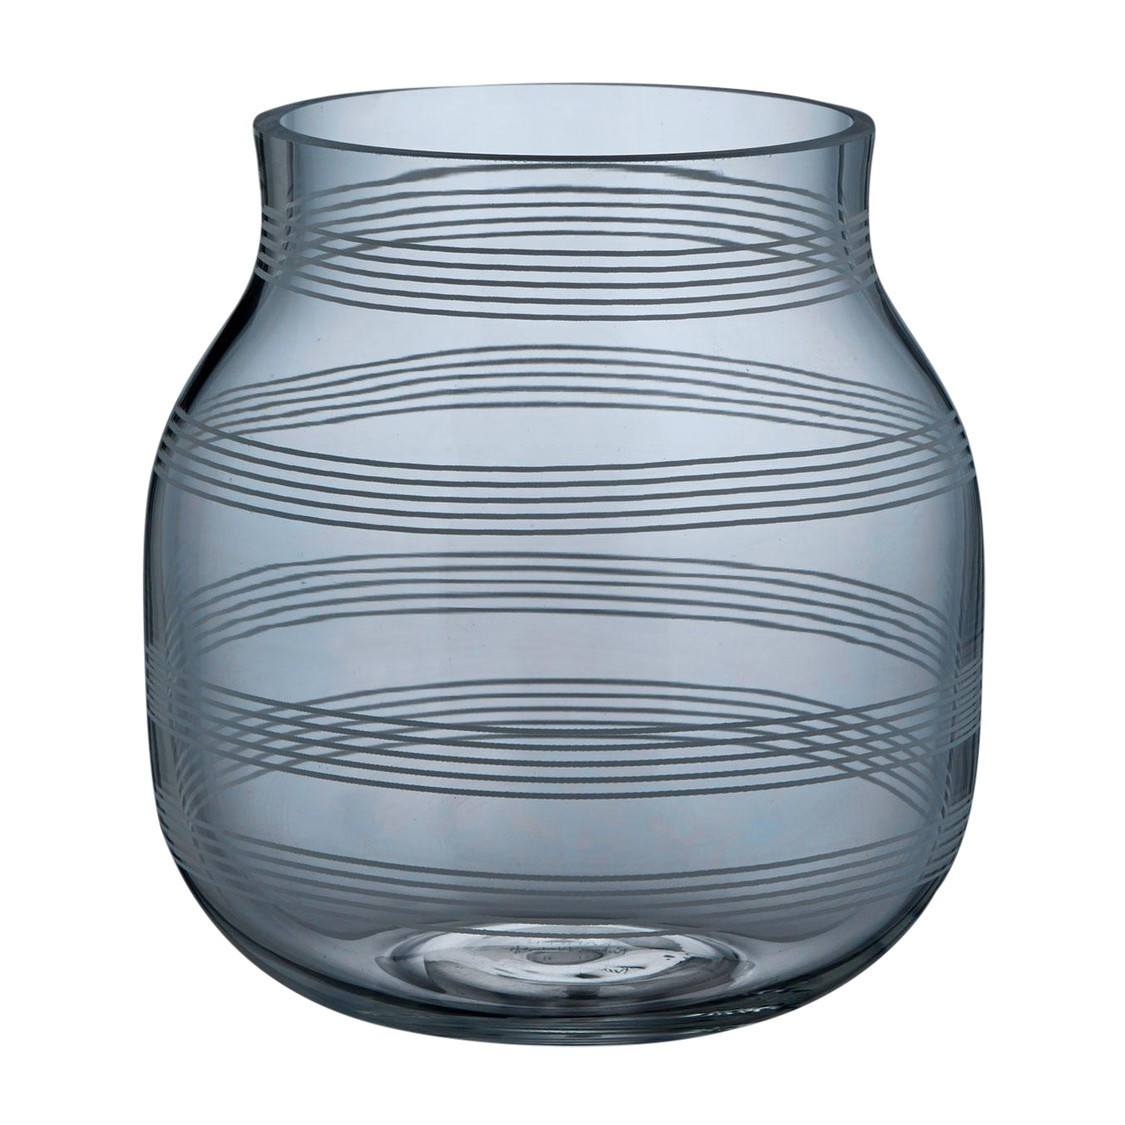 French Vases for Sale Of Ka¤hler Omaggio Glass Vase H 17cm Ambientedirect for Omaggio Glass Vase H 17cm